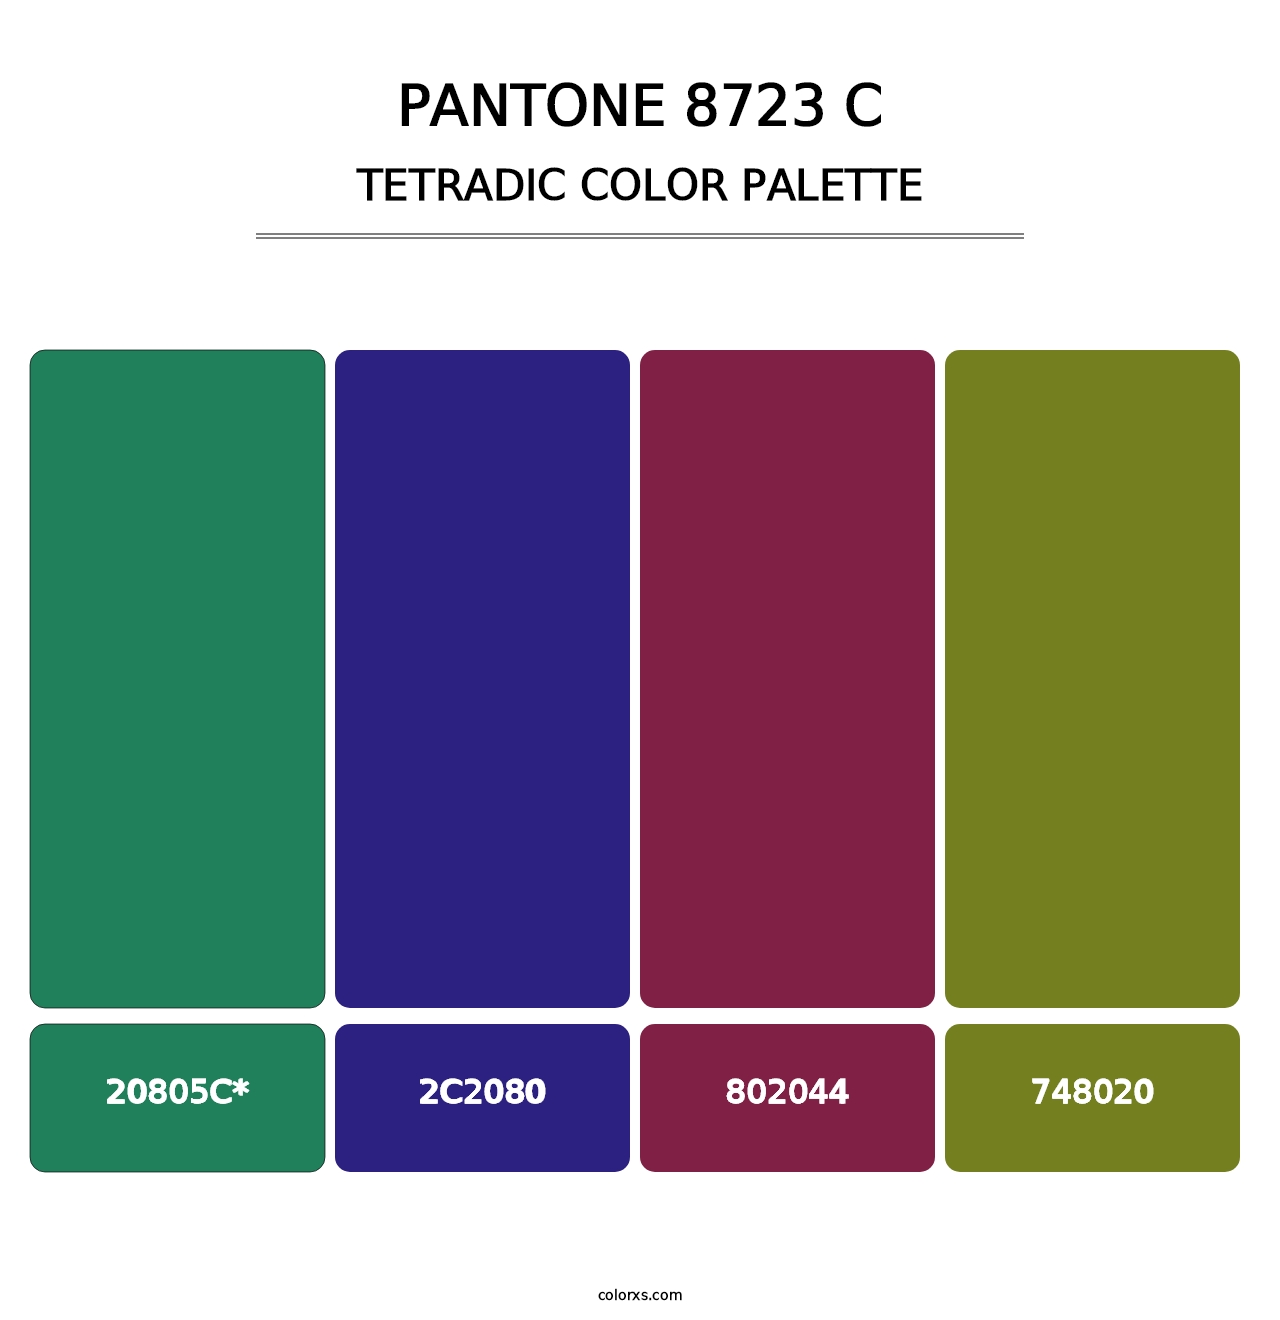 PANTONE 8723 C - Tetradic Color Palette